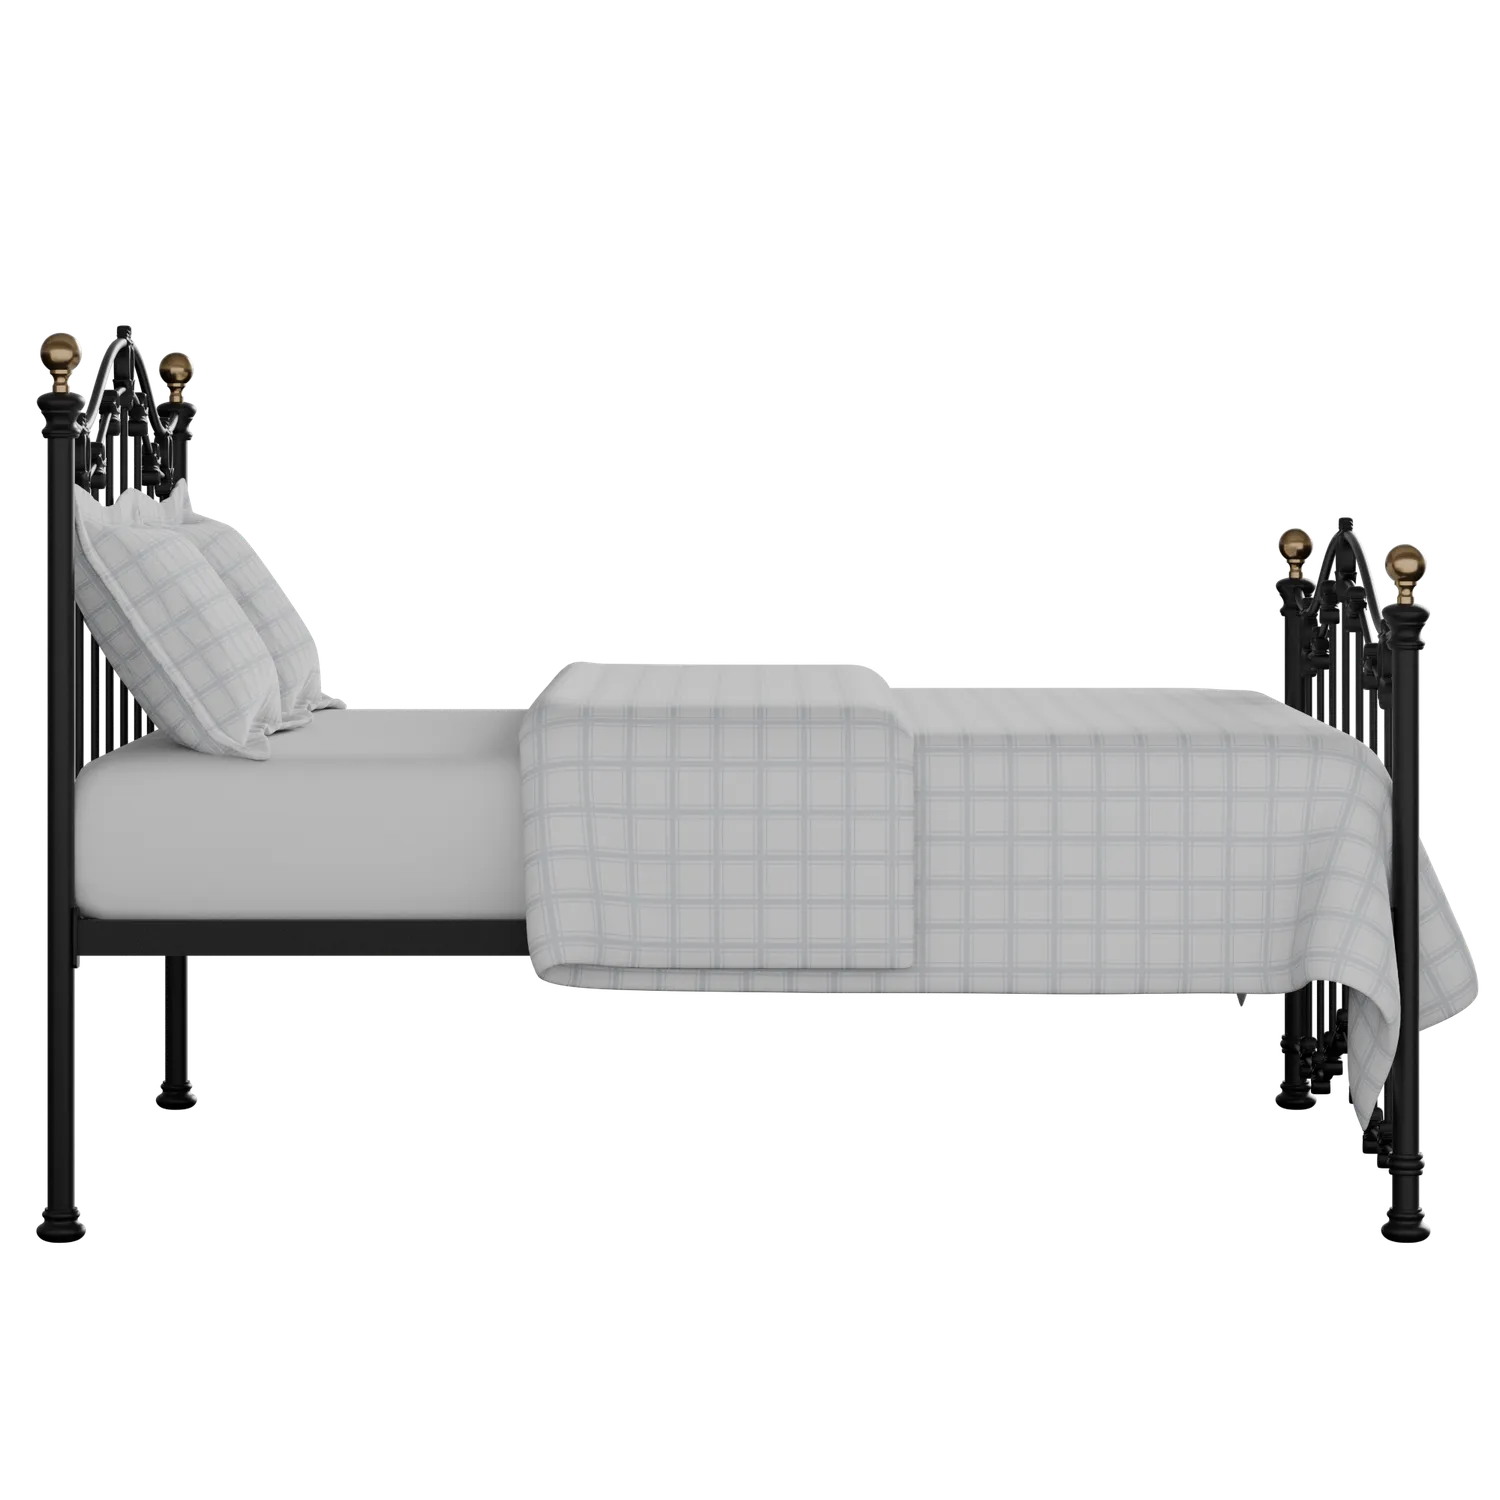 Clarina iron/metal bed in black with Juno mattress